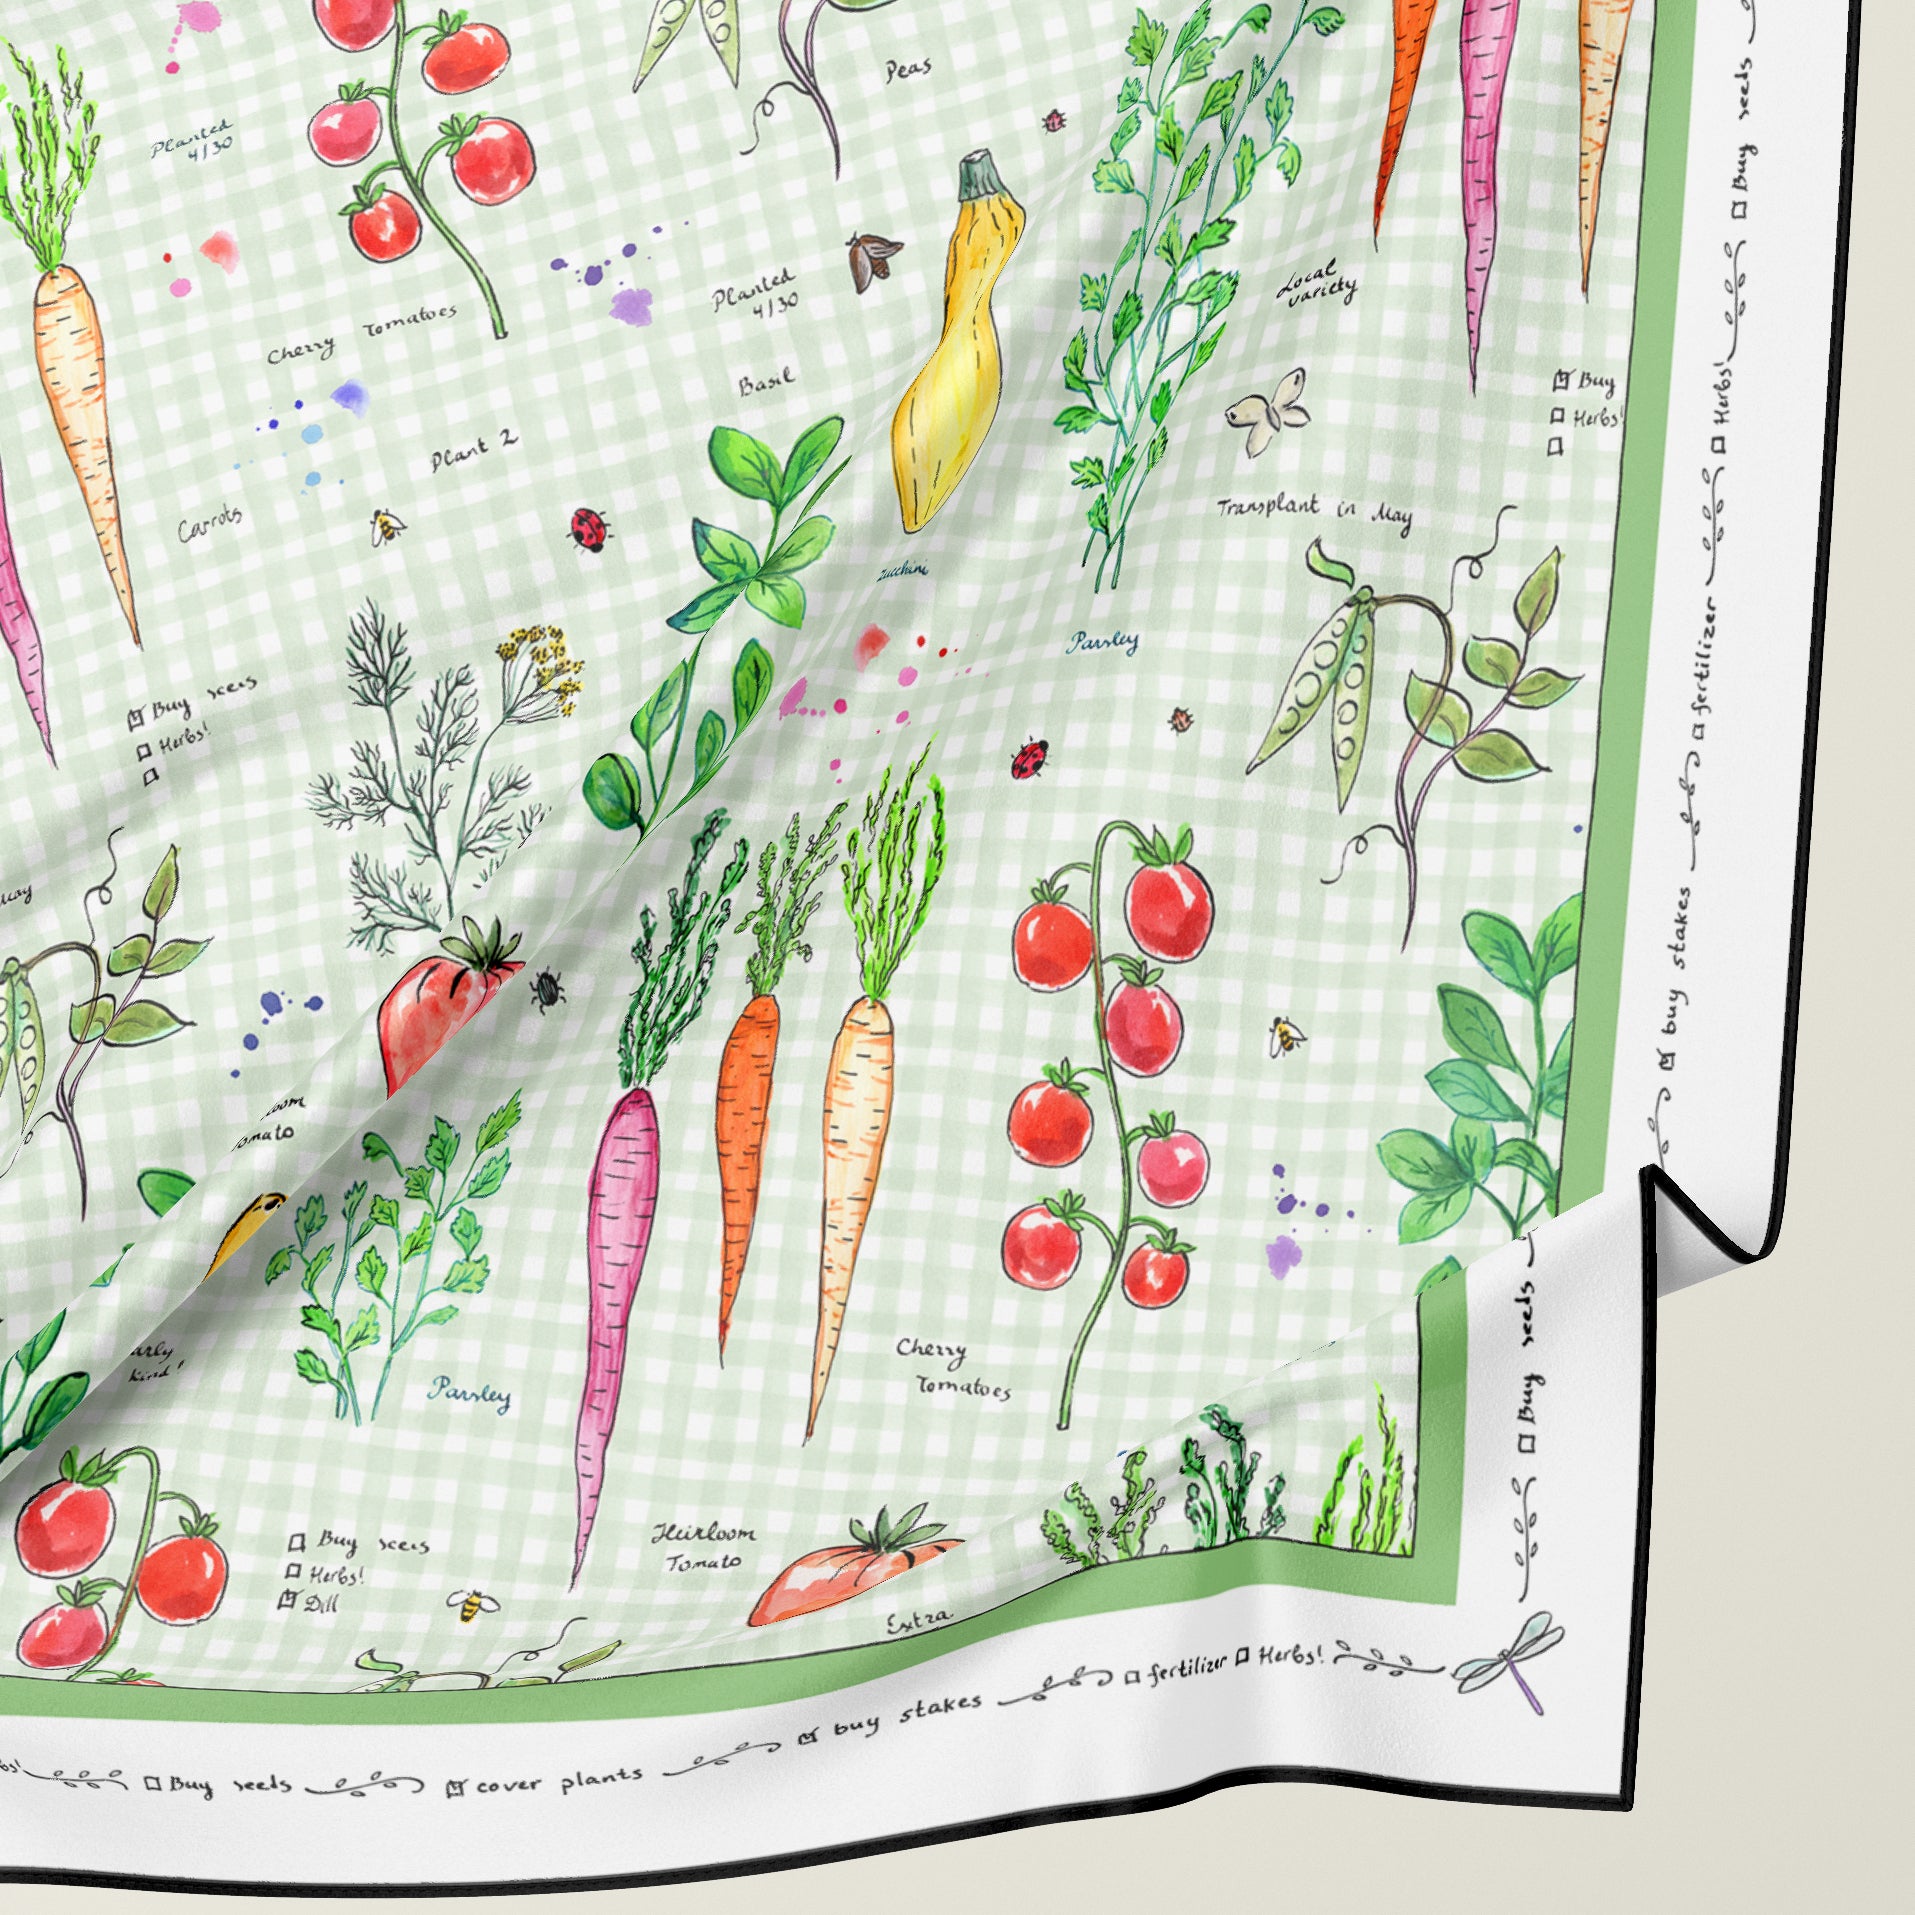 Elegant gardener gift - Sophisticated vegetable and herb garden silk scarf by Darya Karenski